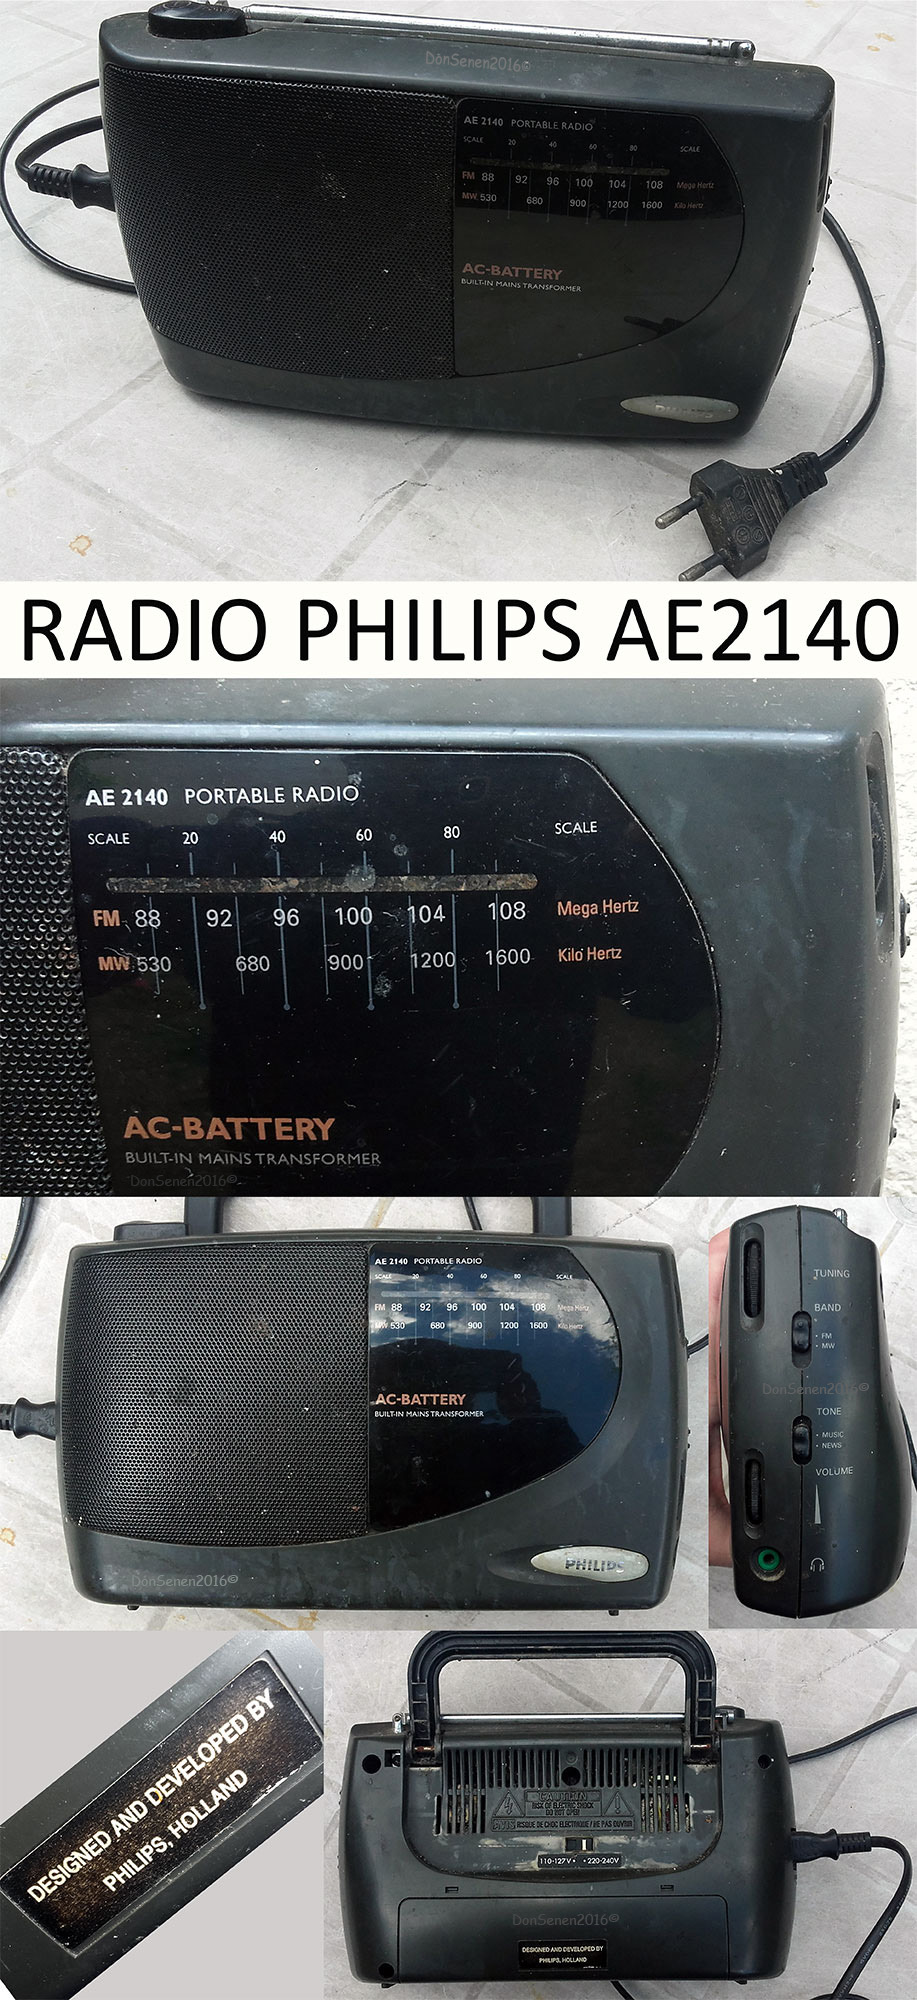 RADIO PHILIPS AE2140